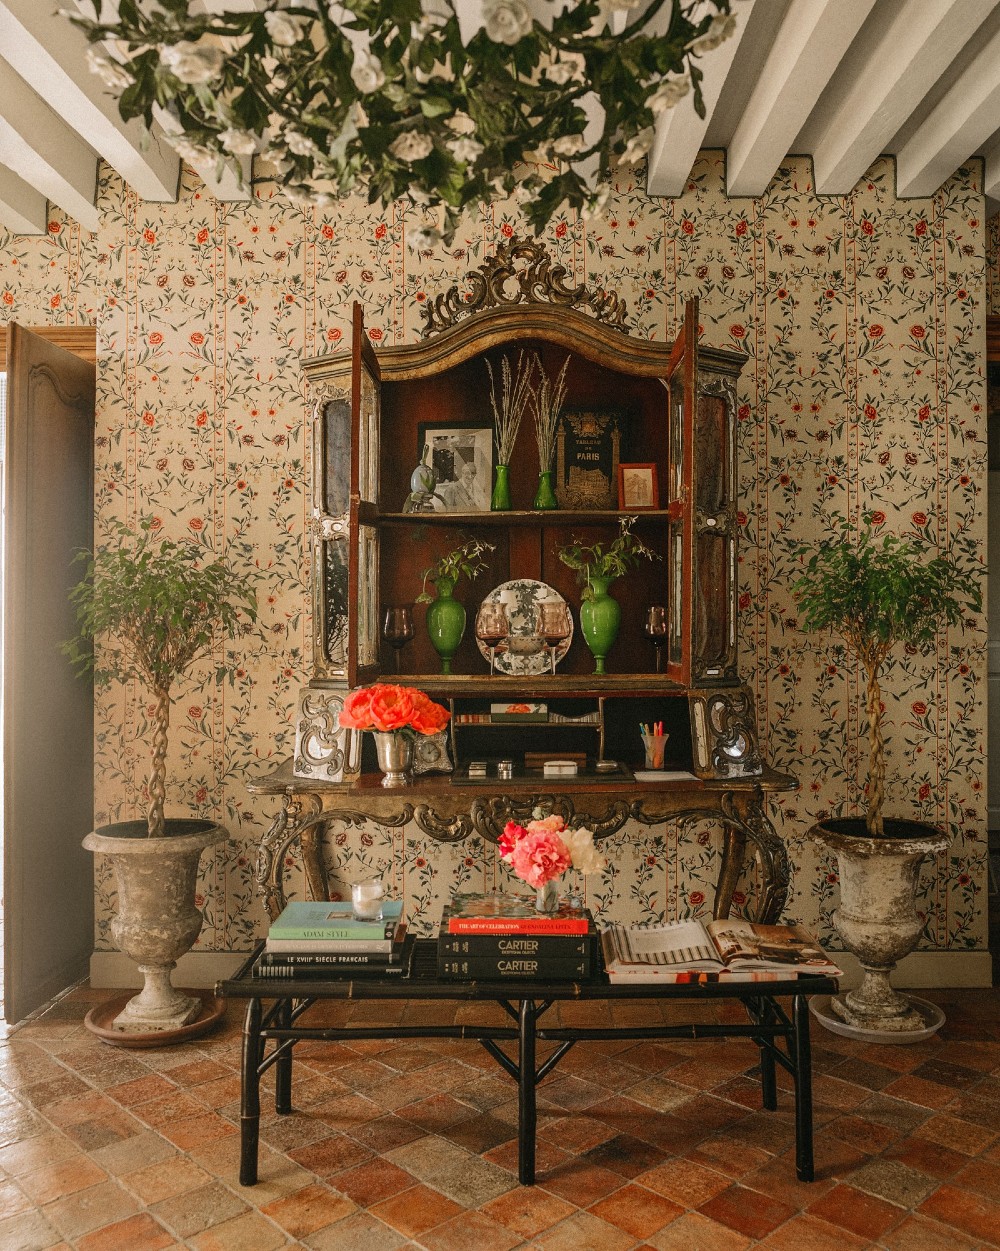 Décor Inspiration: Cordelia de Castellane’s Charming French Country Home